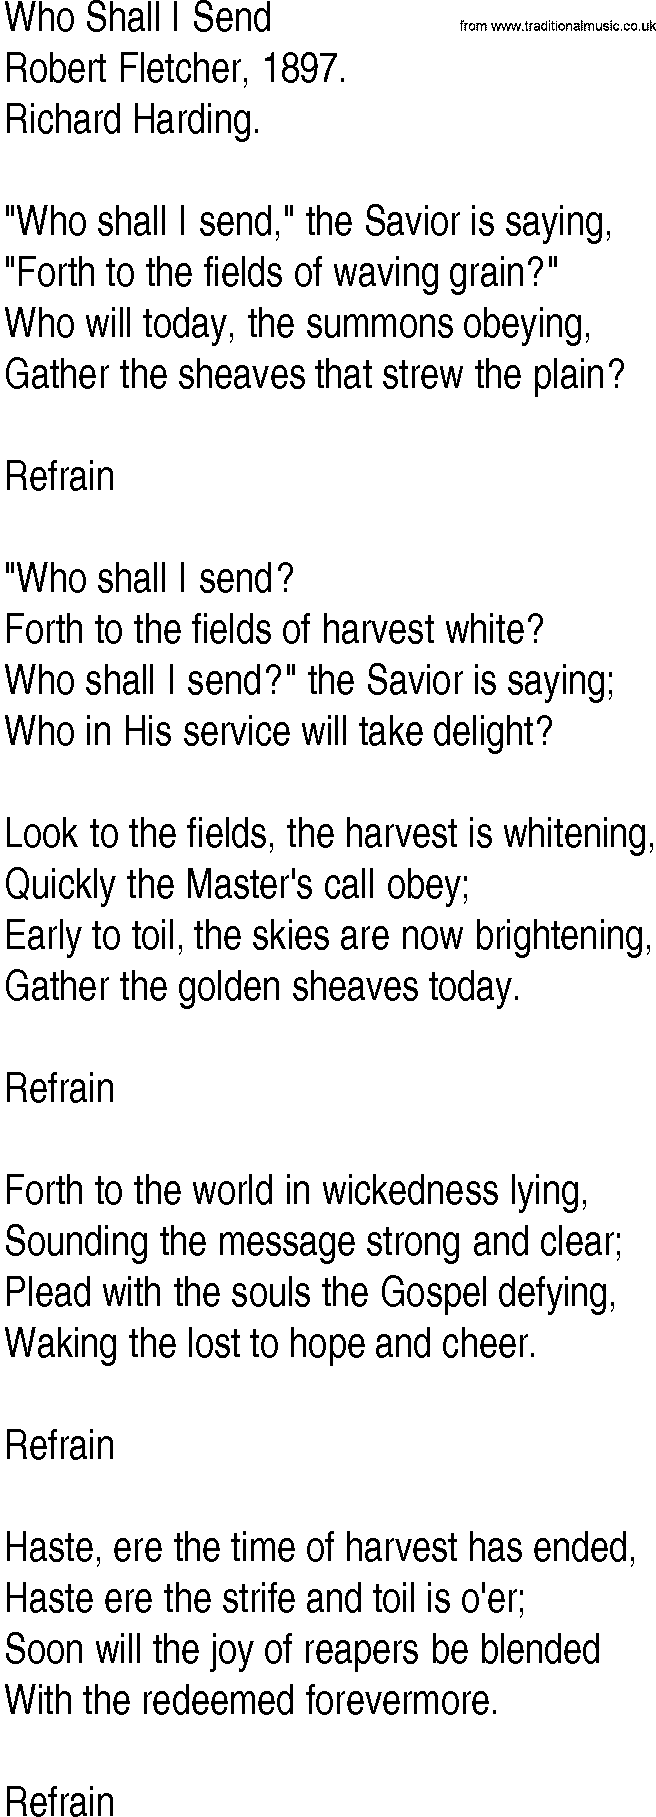 Hymn and Gospel Song: Who Shall I Send by Robert Fletcher lyrics